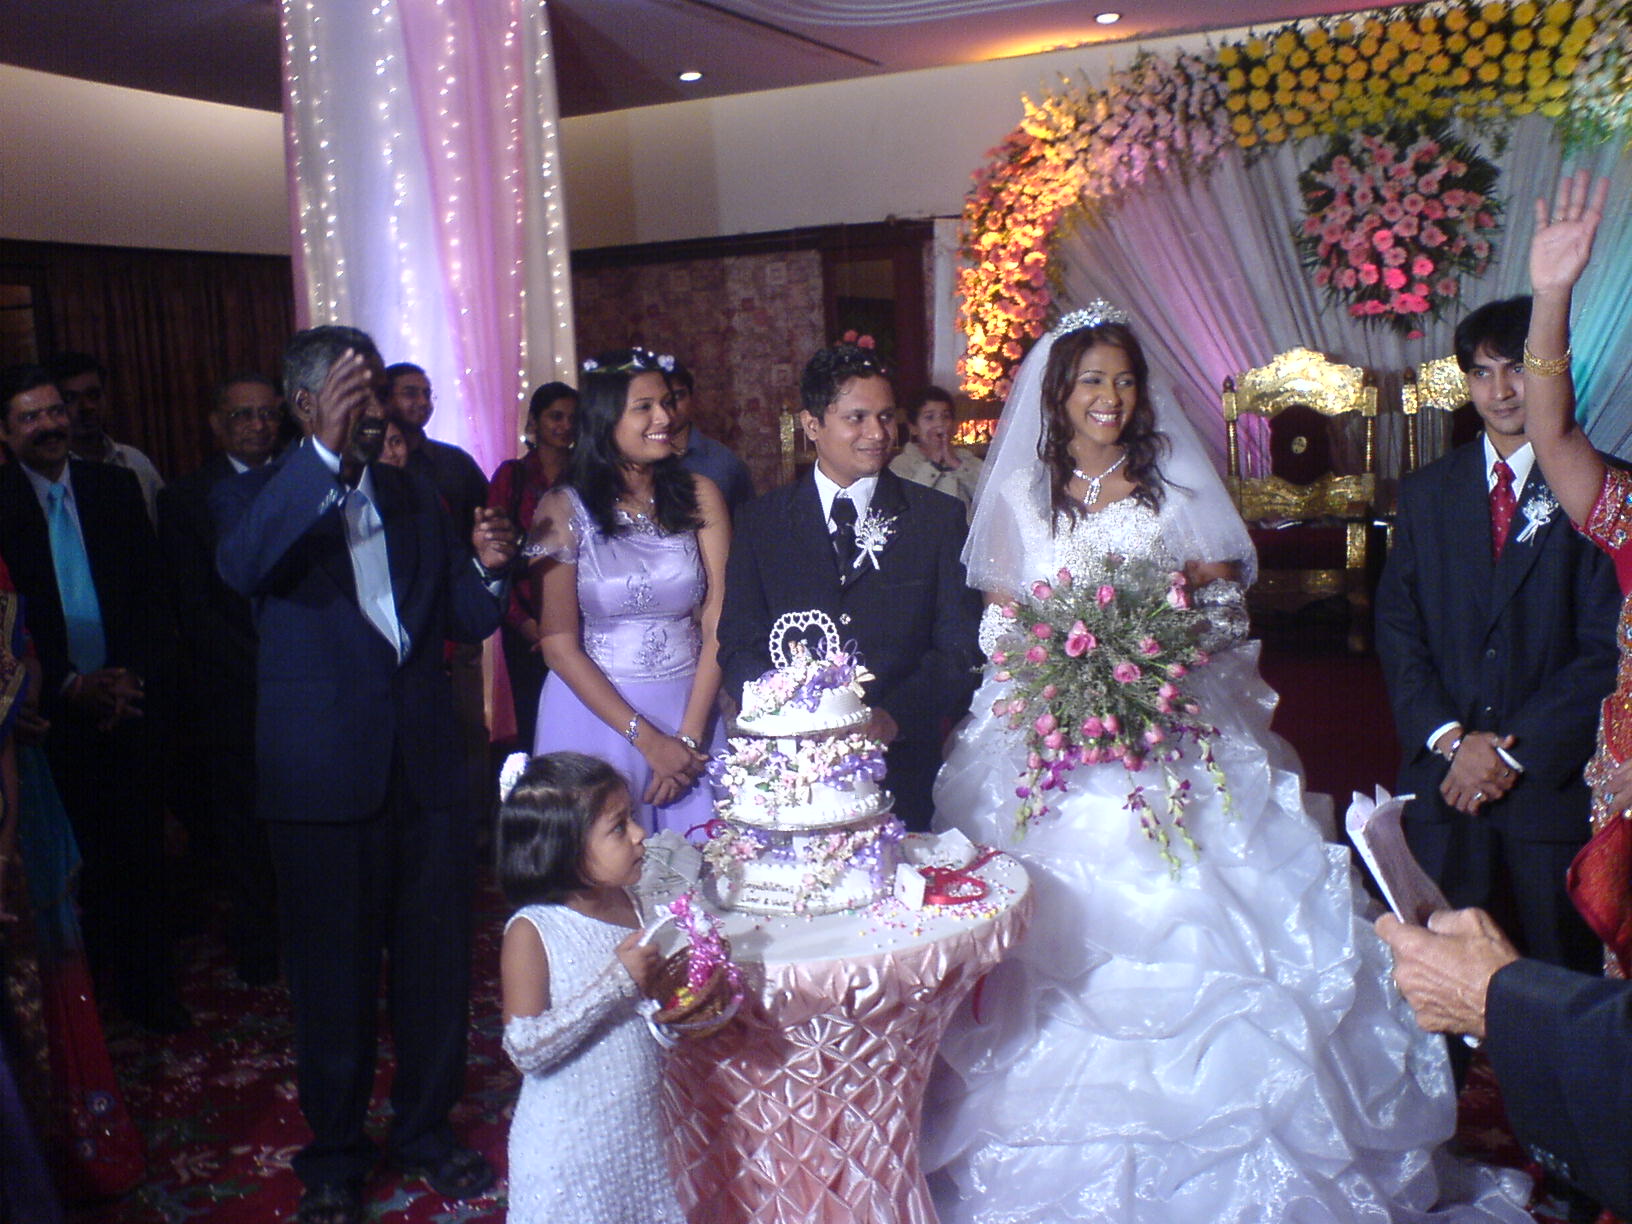 http://upload.wikimedia.org/wikipedia/commons/e/ed/Catholic_wedding_in_India.jpg